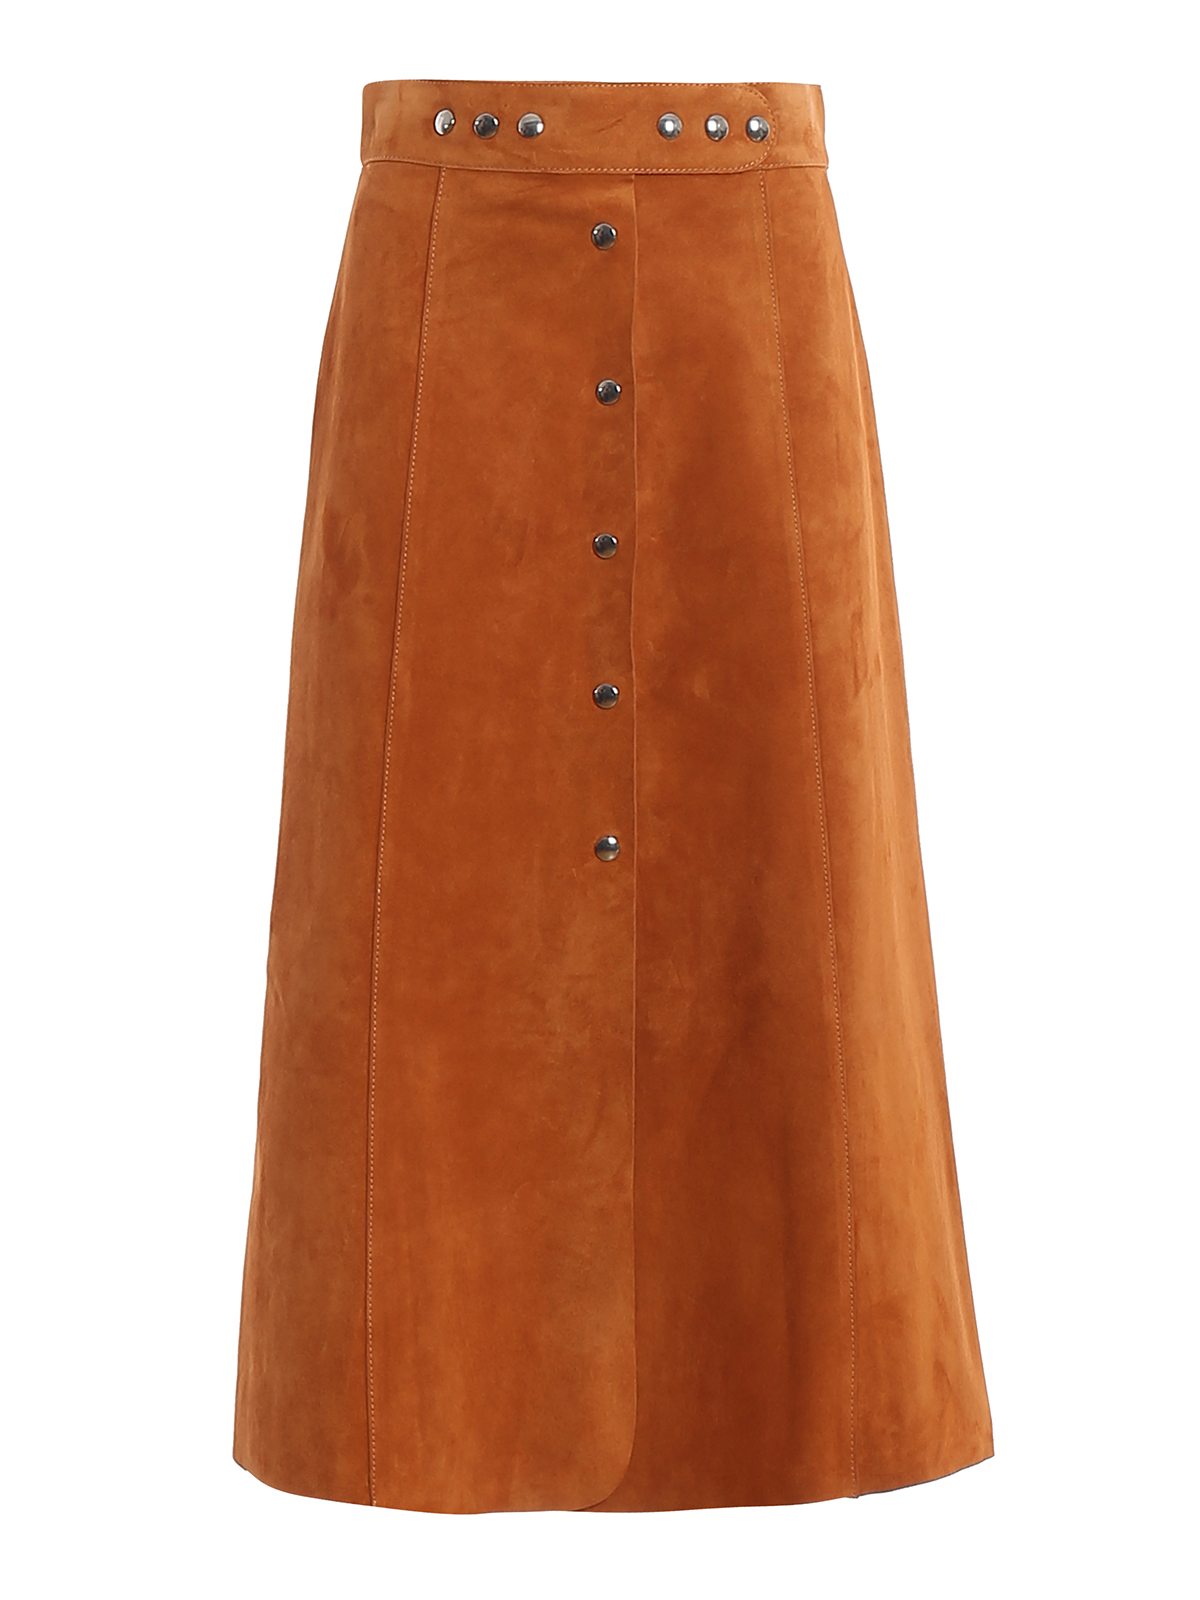 Prada Suede Skirt In Light Brown